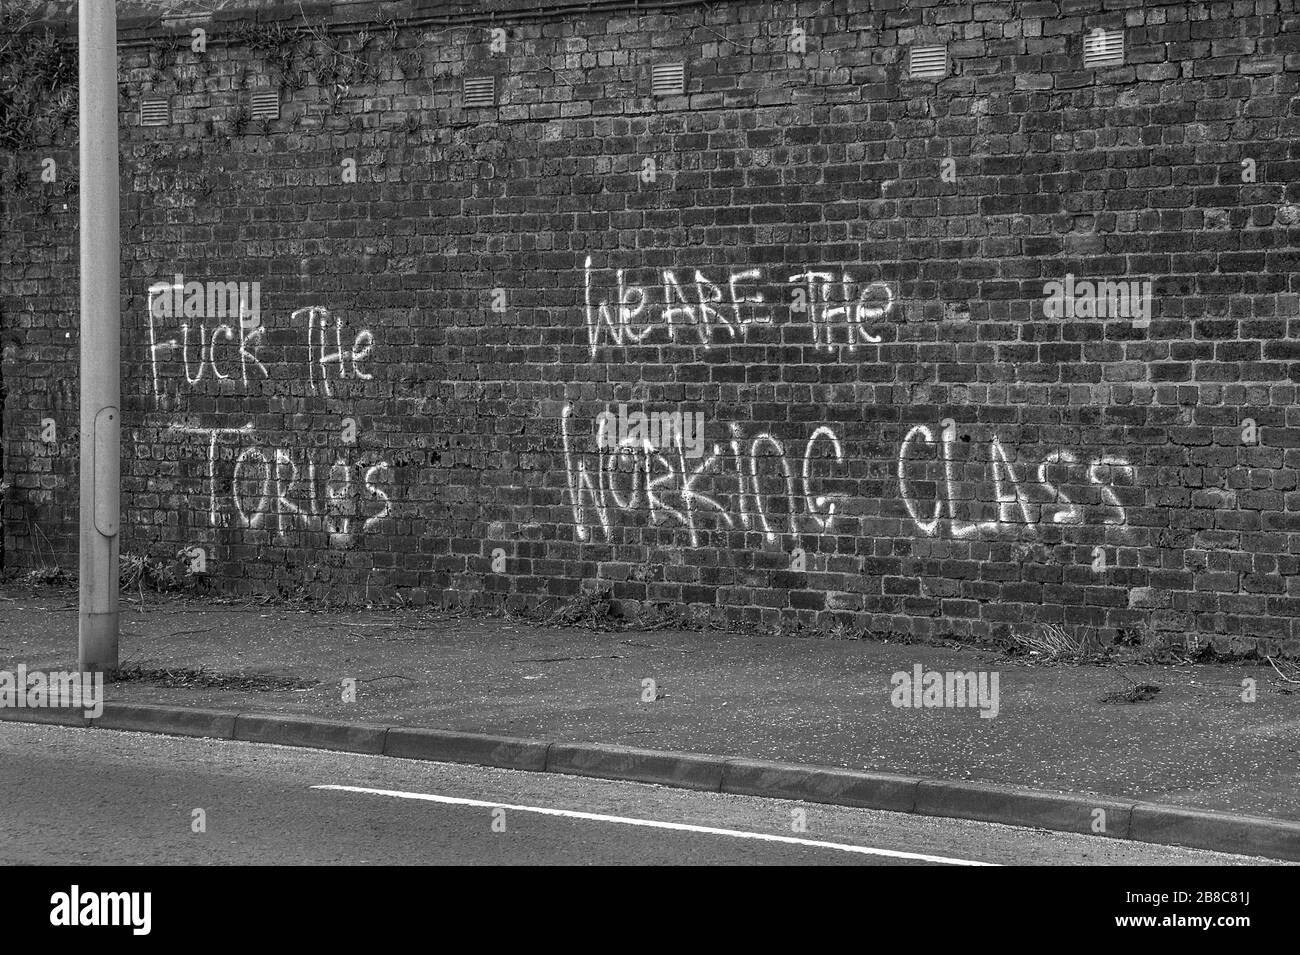 Rutherglen, Scotland, UK. 21st March 2020: Black and White images of an anti- Conservative graffiti on Shawfield stadium brick wall. Stock Photo